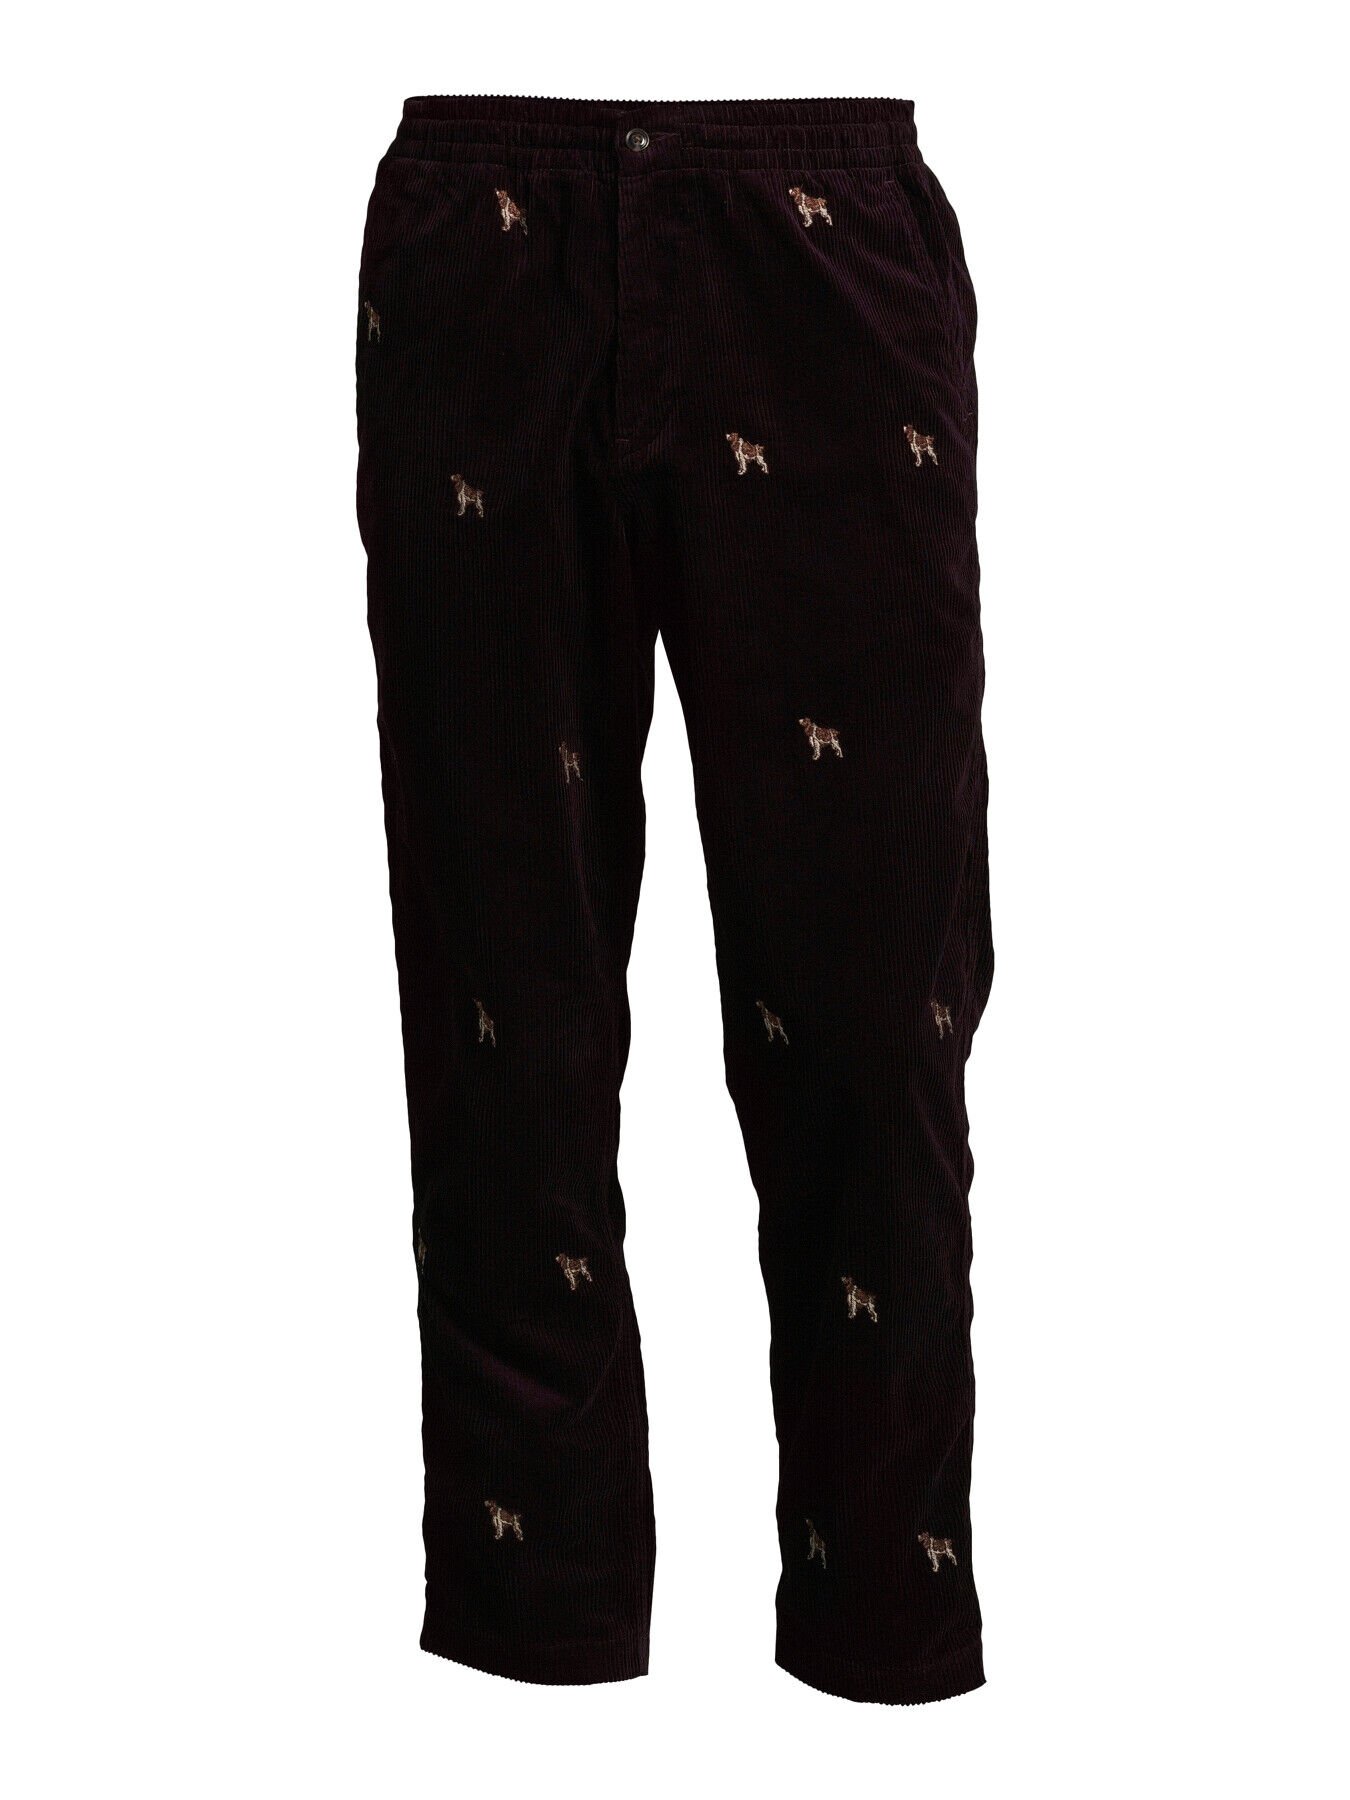 Ralph Lauren Cord Trousers, Polo Black